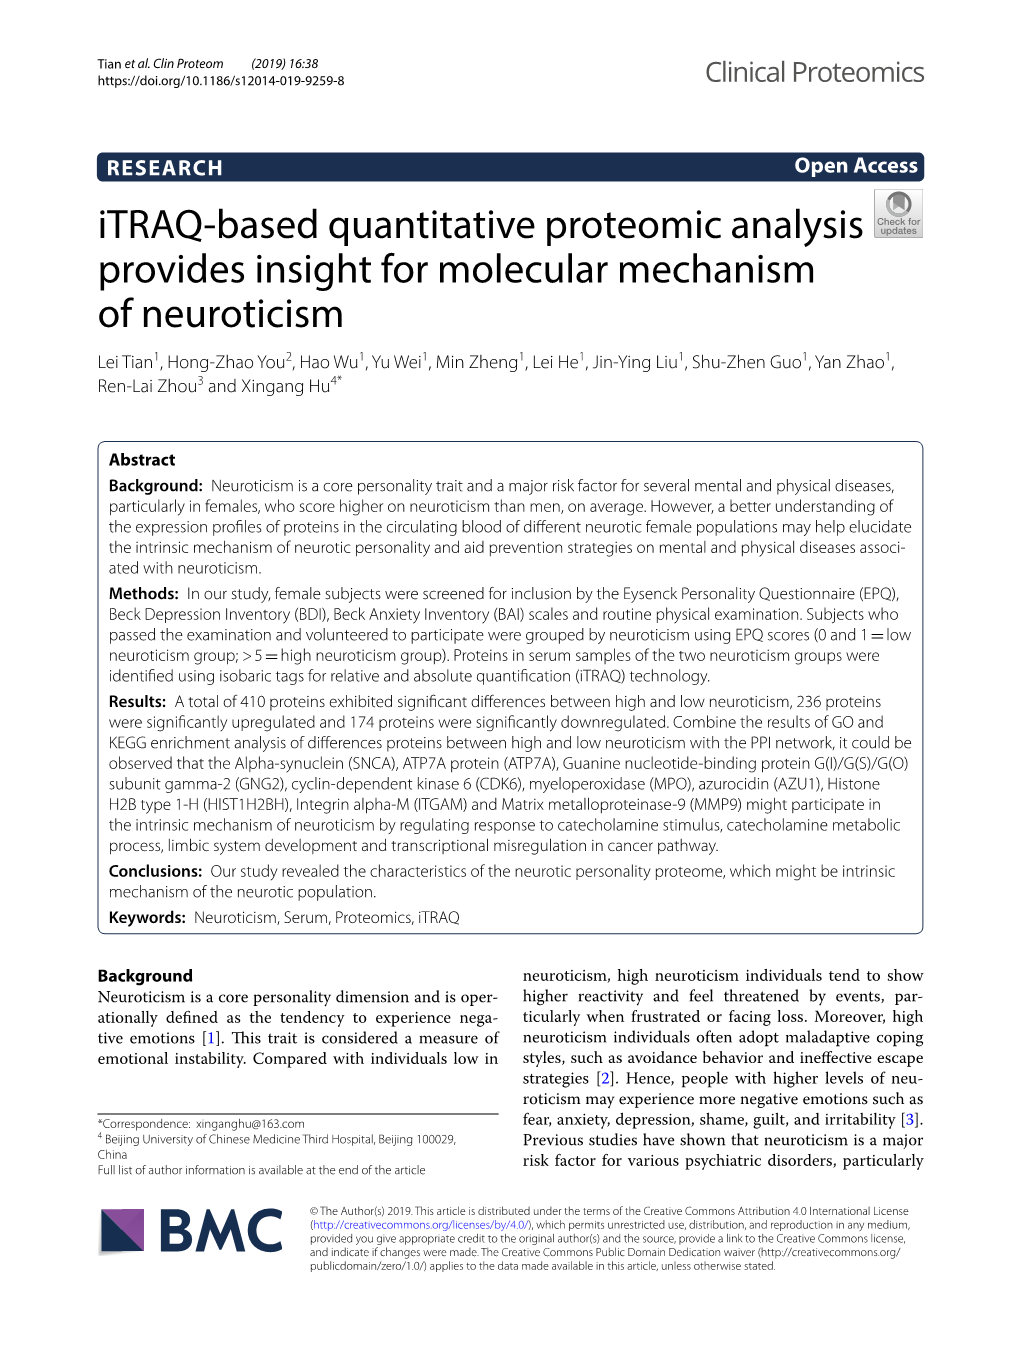 Itraq-Based Quantitative Proteomic Analysis Provides Insight For